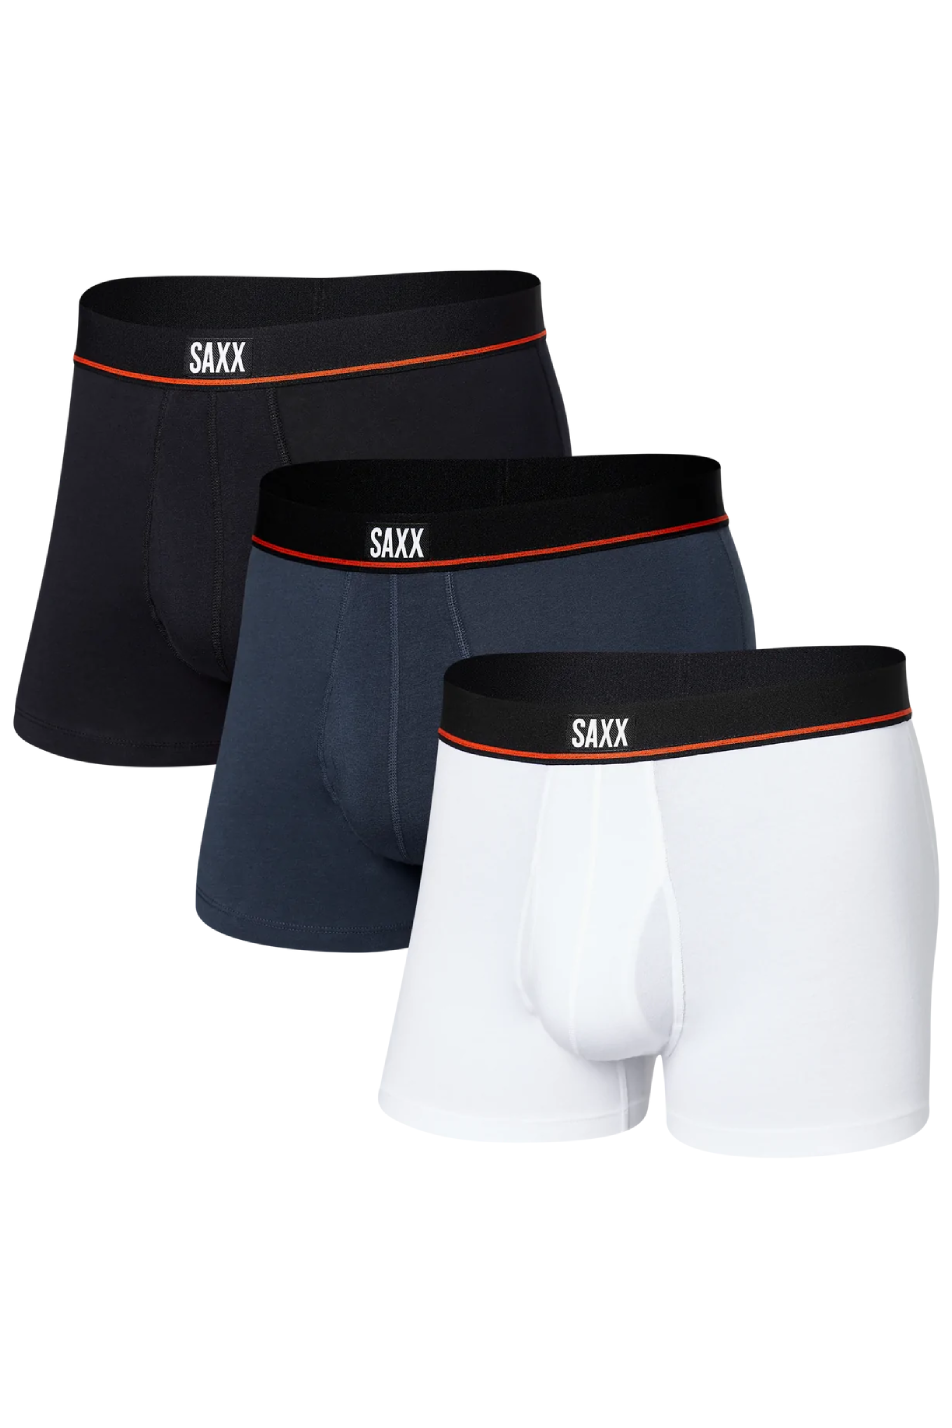 SAXX 3 Pack Men's Non-Stop Stretch Cotton Trunk